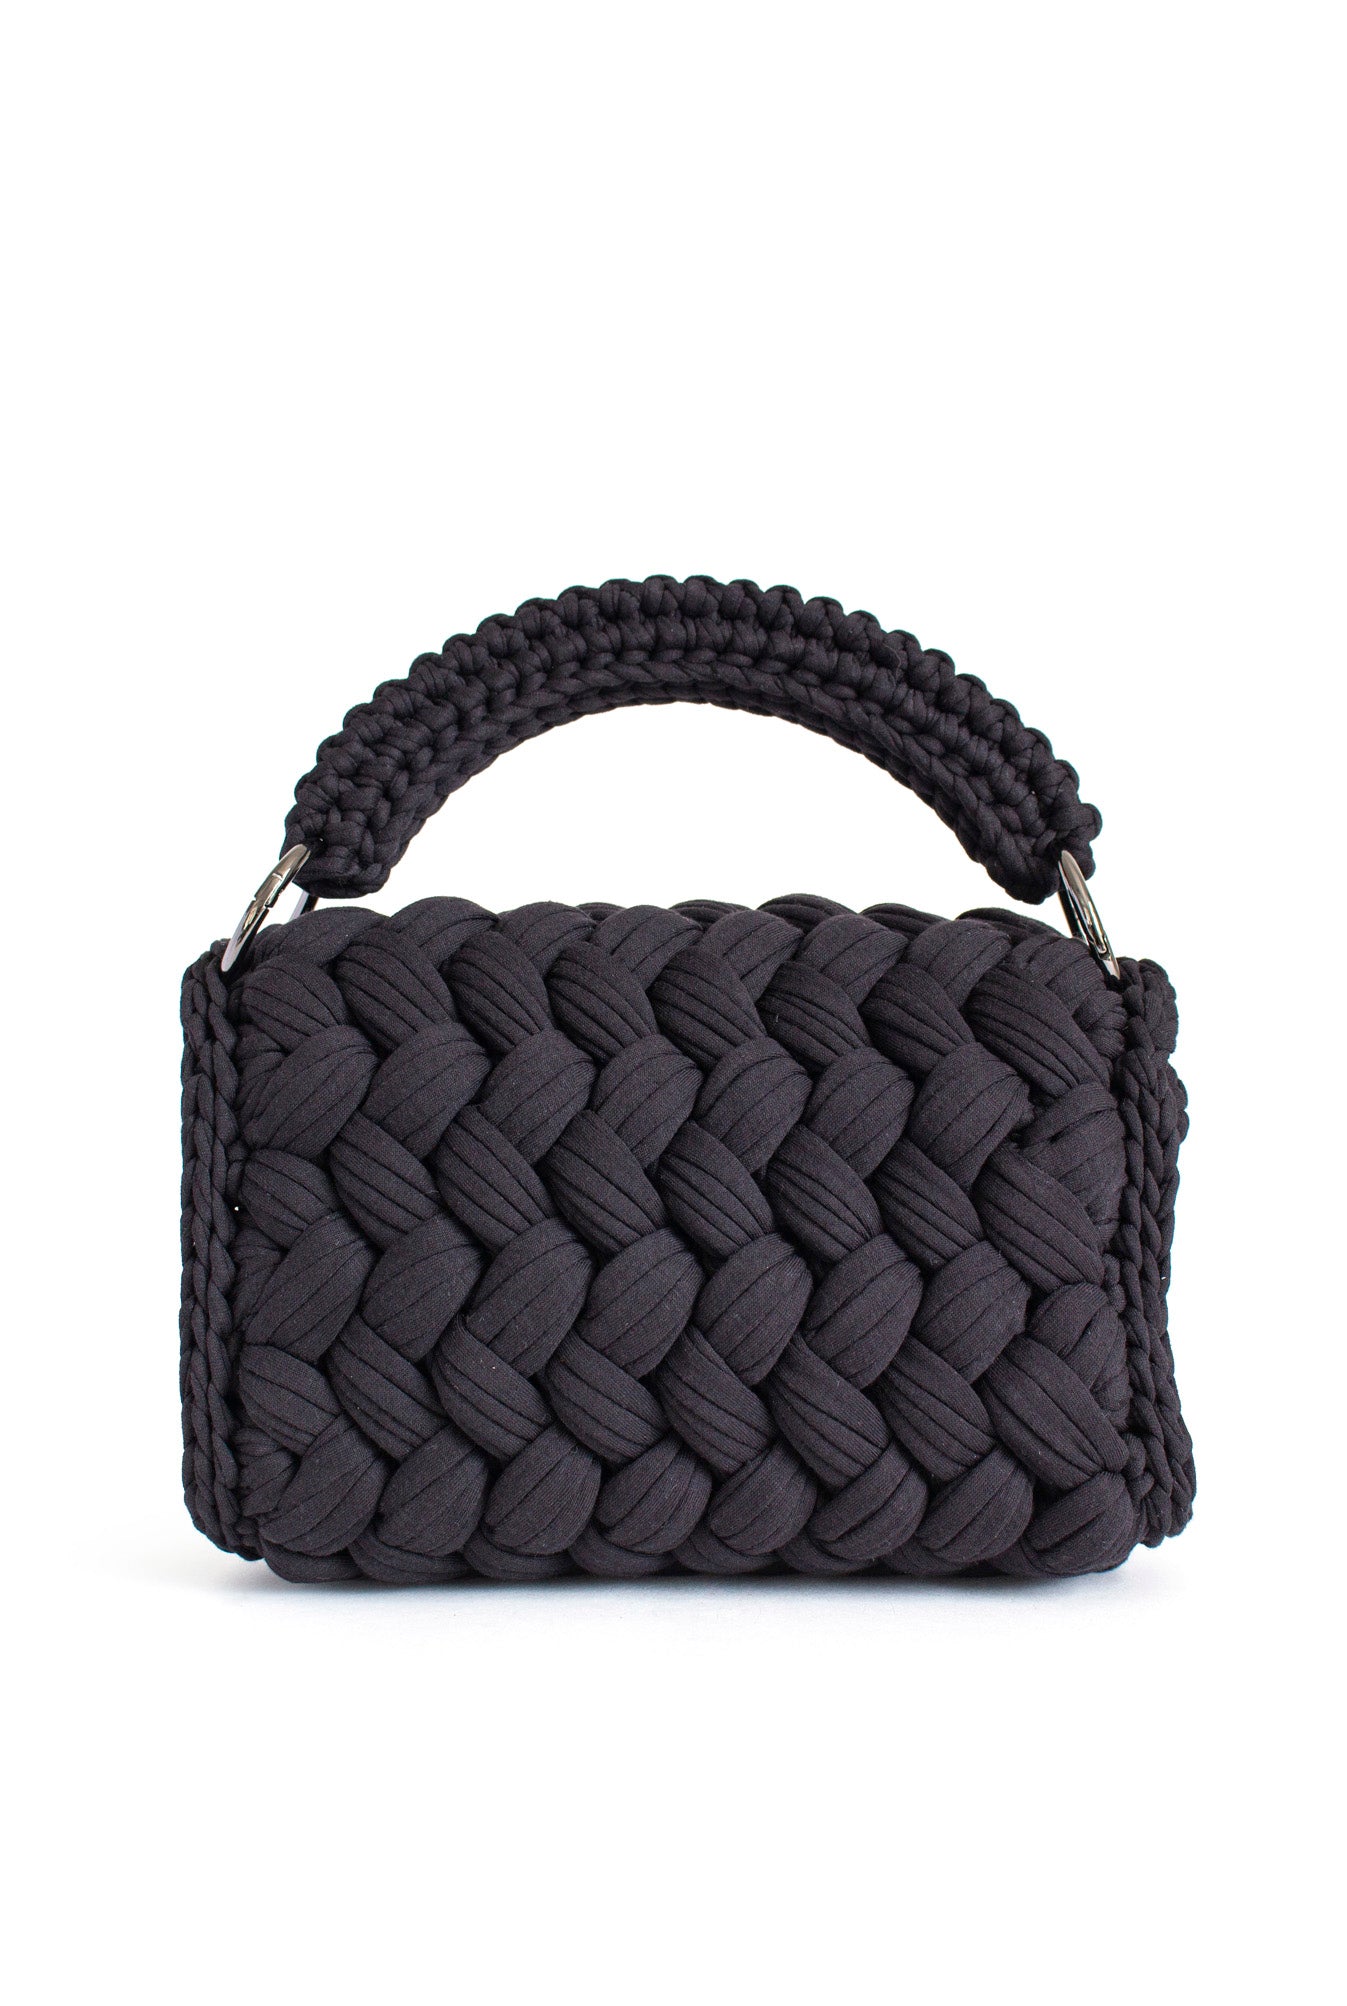 Black Braided Handbag – Equal Hands